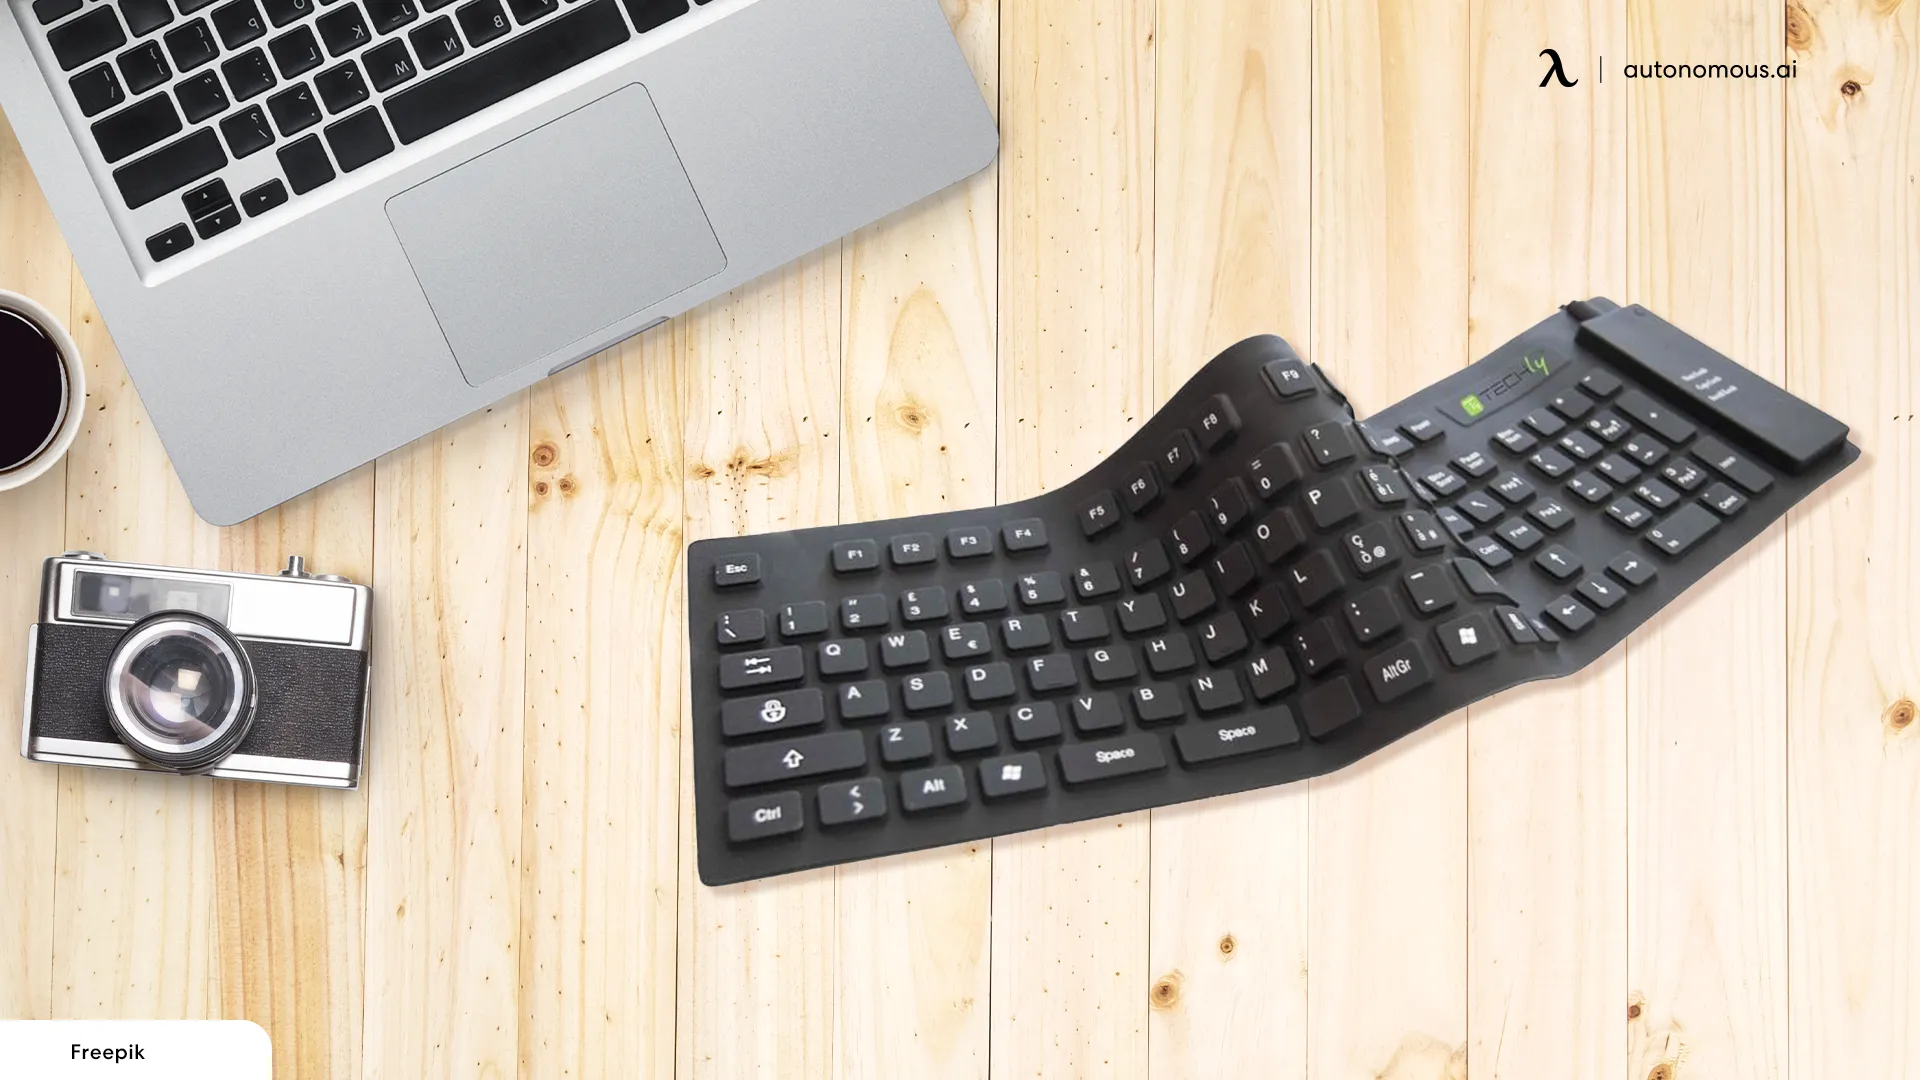 Flexible Keyboards - types of keyboards